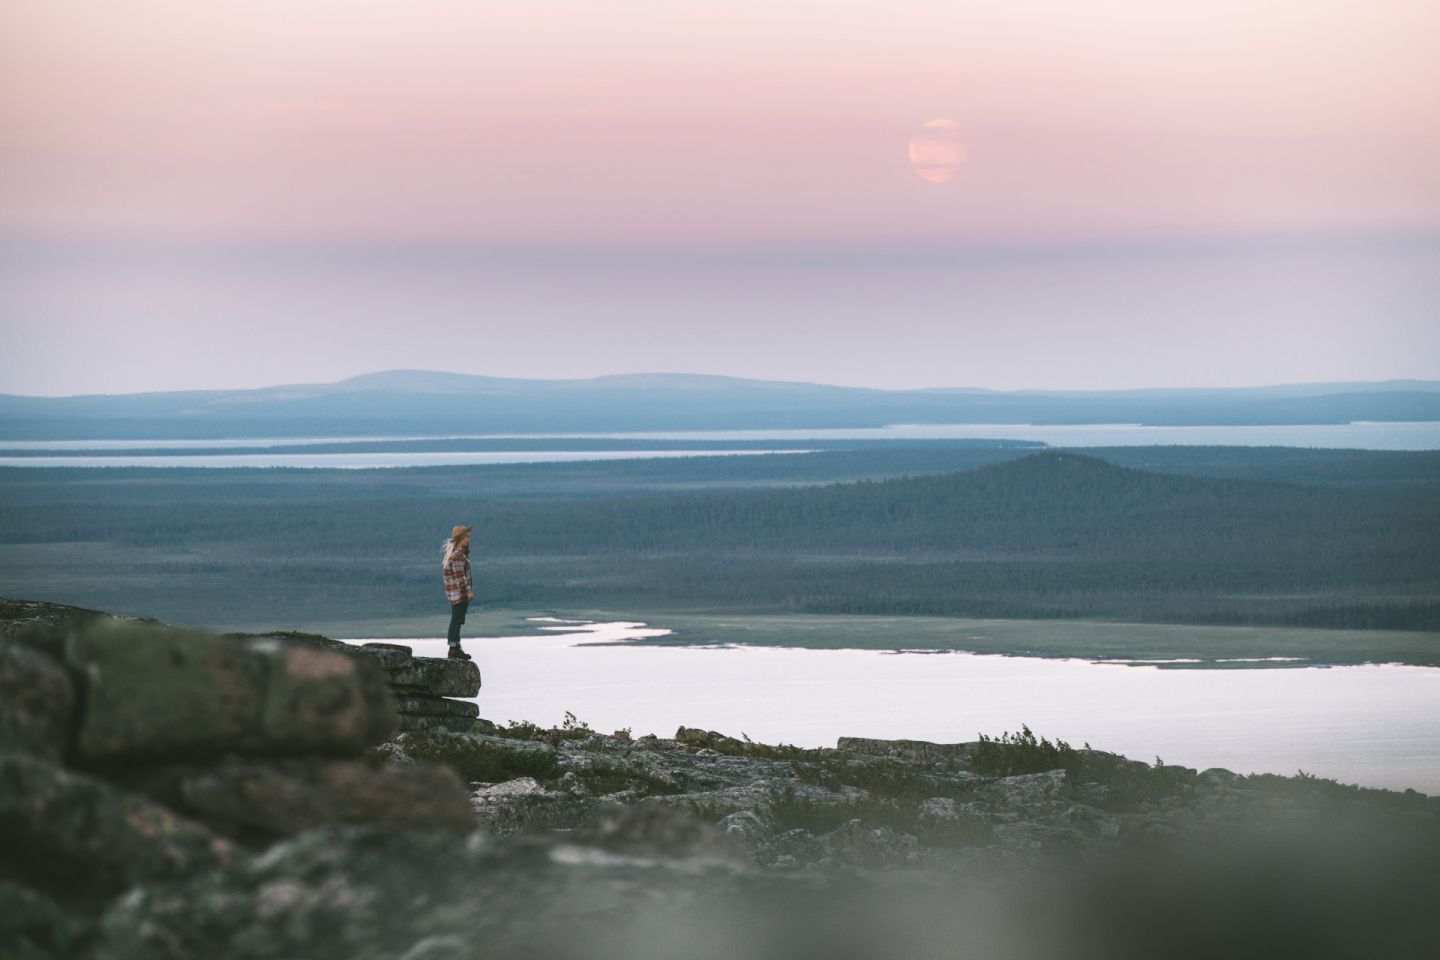 Overlooking a summer vista in Finnish Lapland